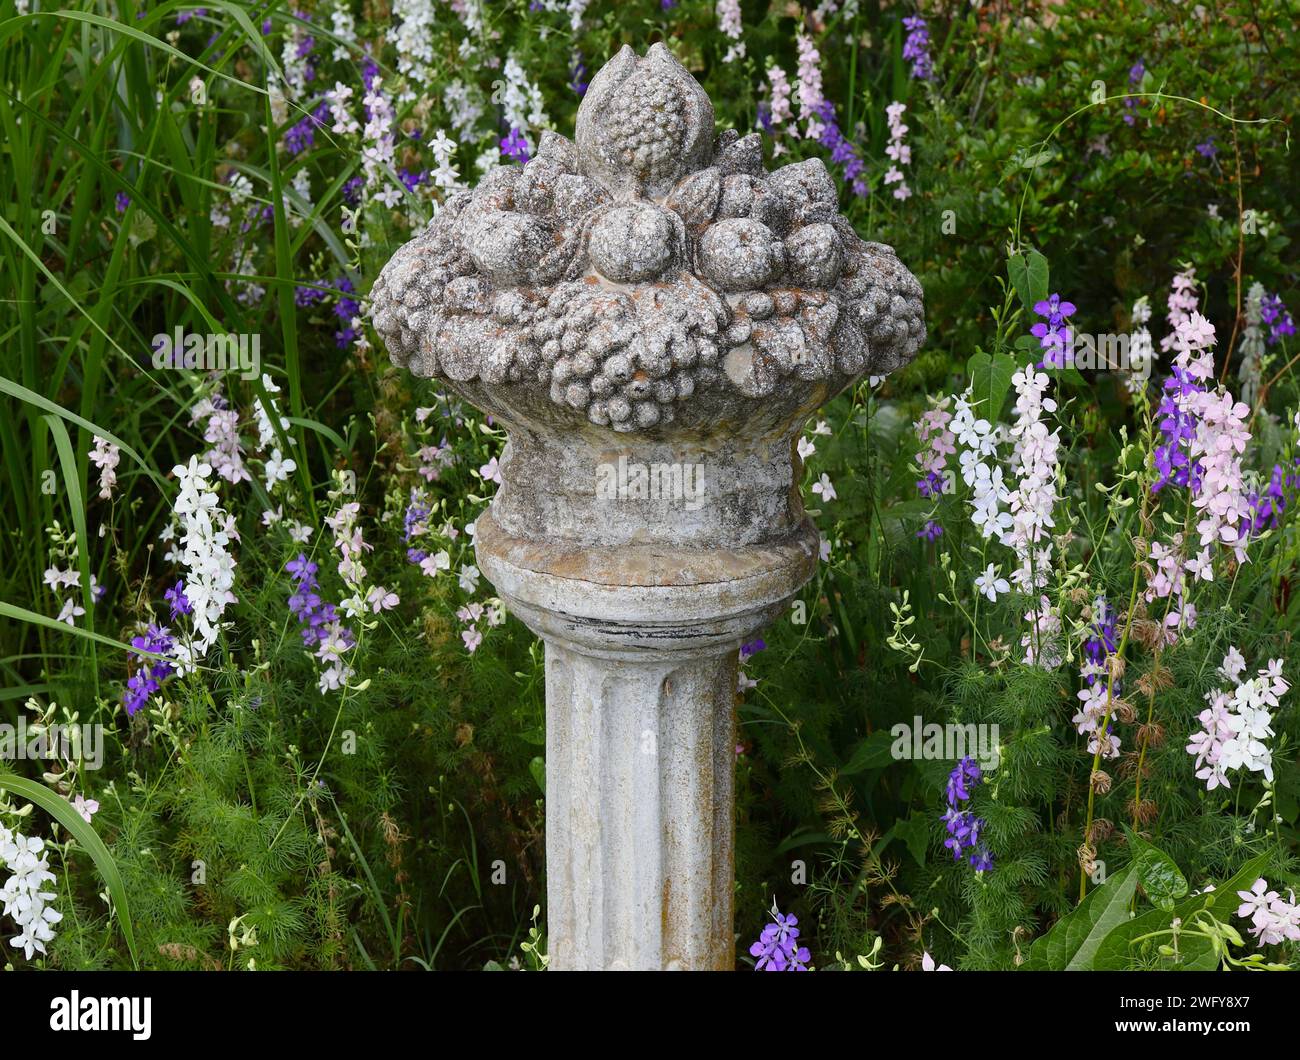 Replica of Ancient Roman Bowl of Fruit Sculpture on Pedestal Stock Photo